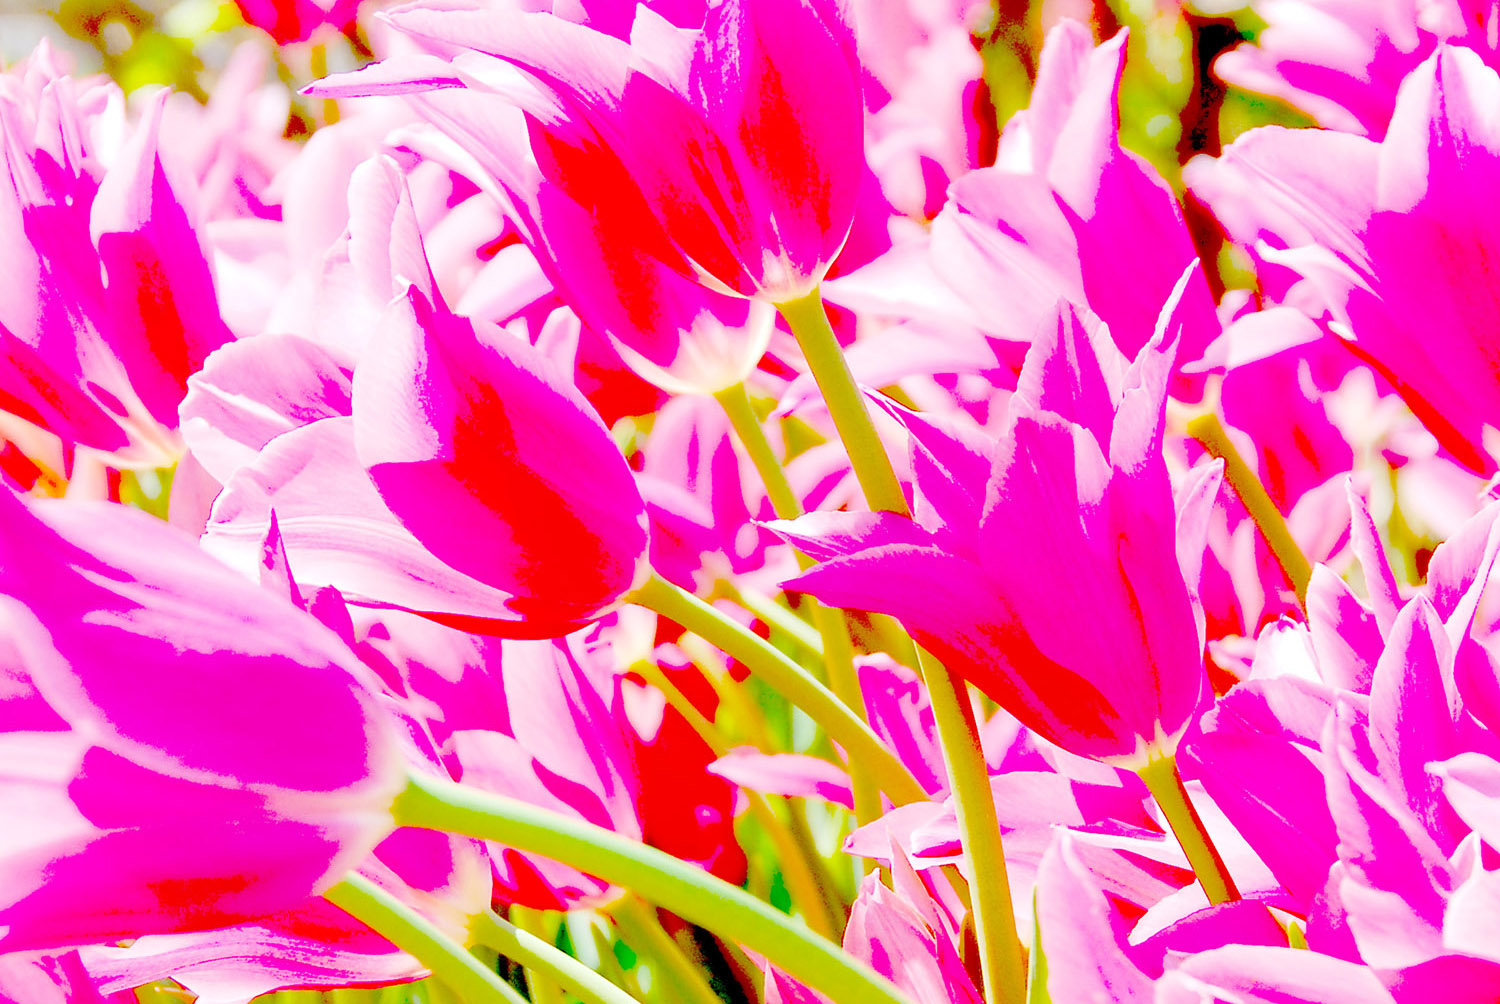 Tulips_Pink_Abstract_Decorative_Wall_Art.jpg